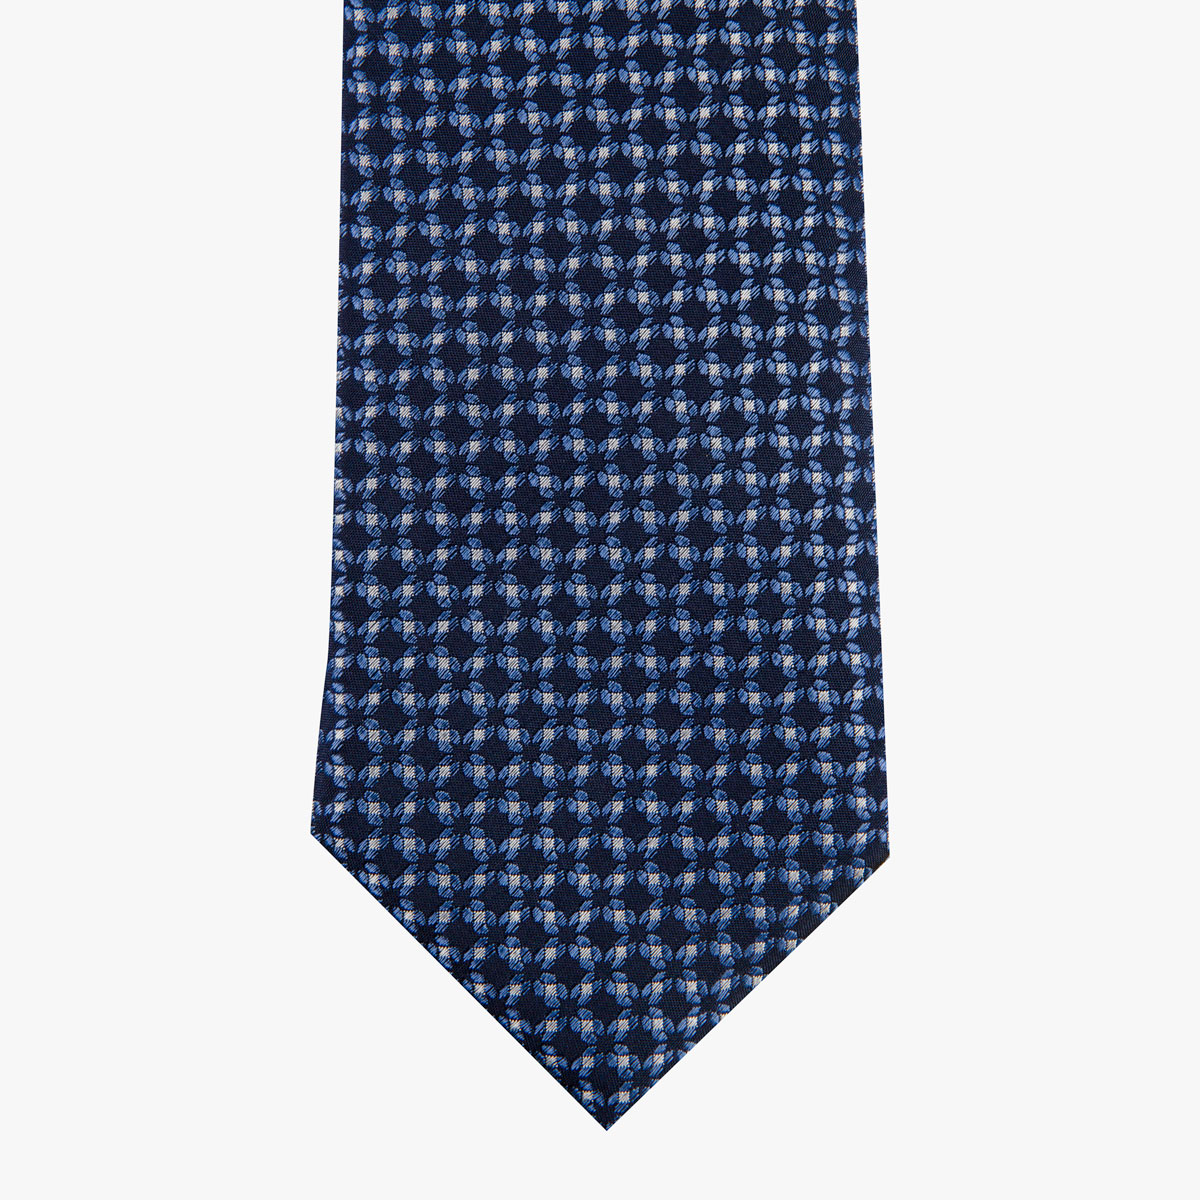 Krawatte glatt mit blauem Muster in dunkelblau